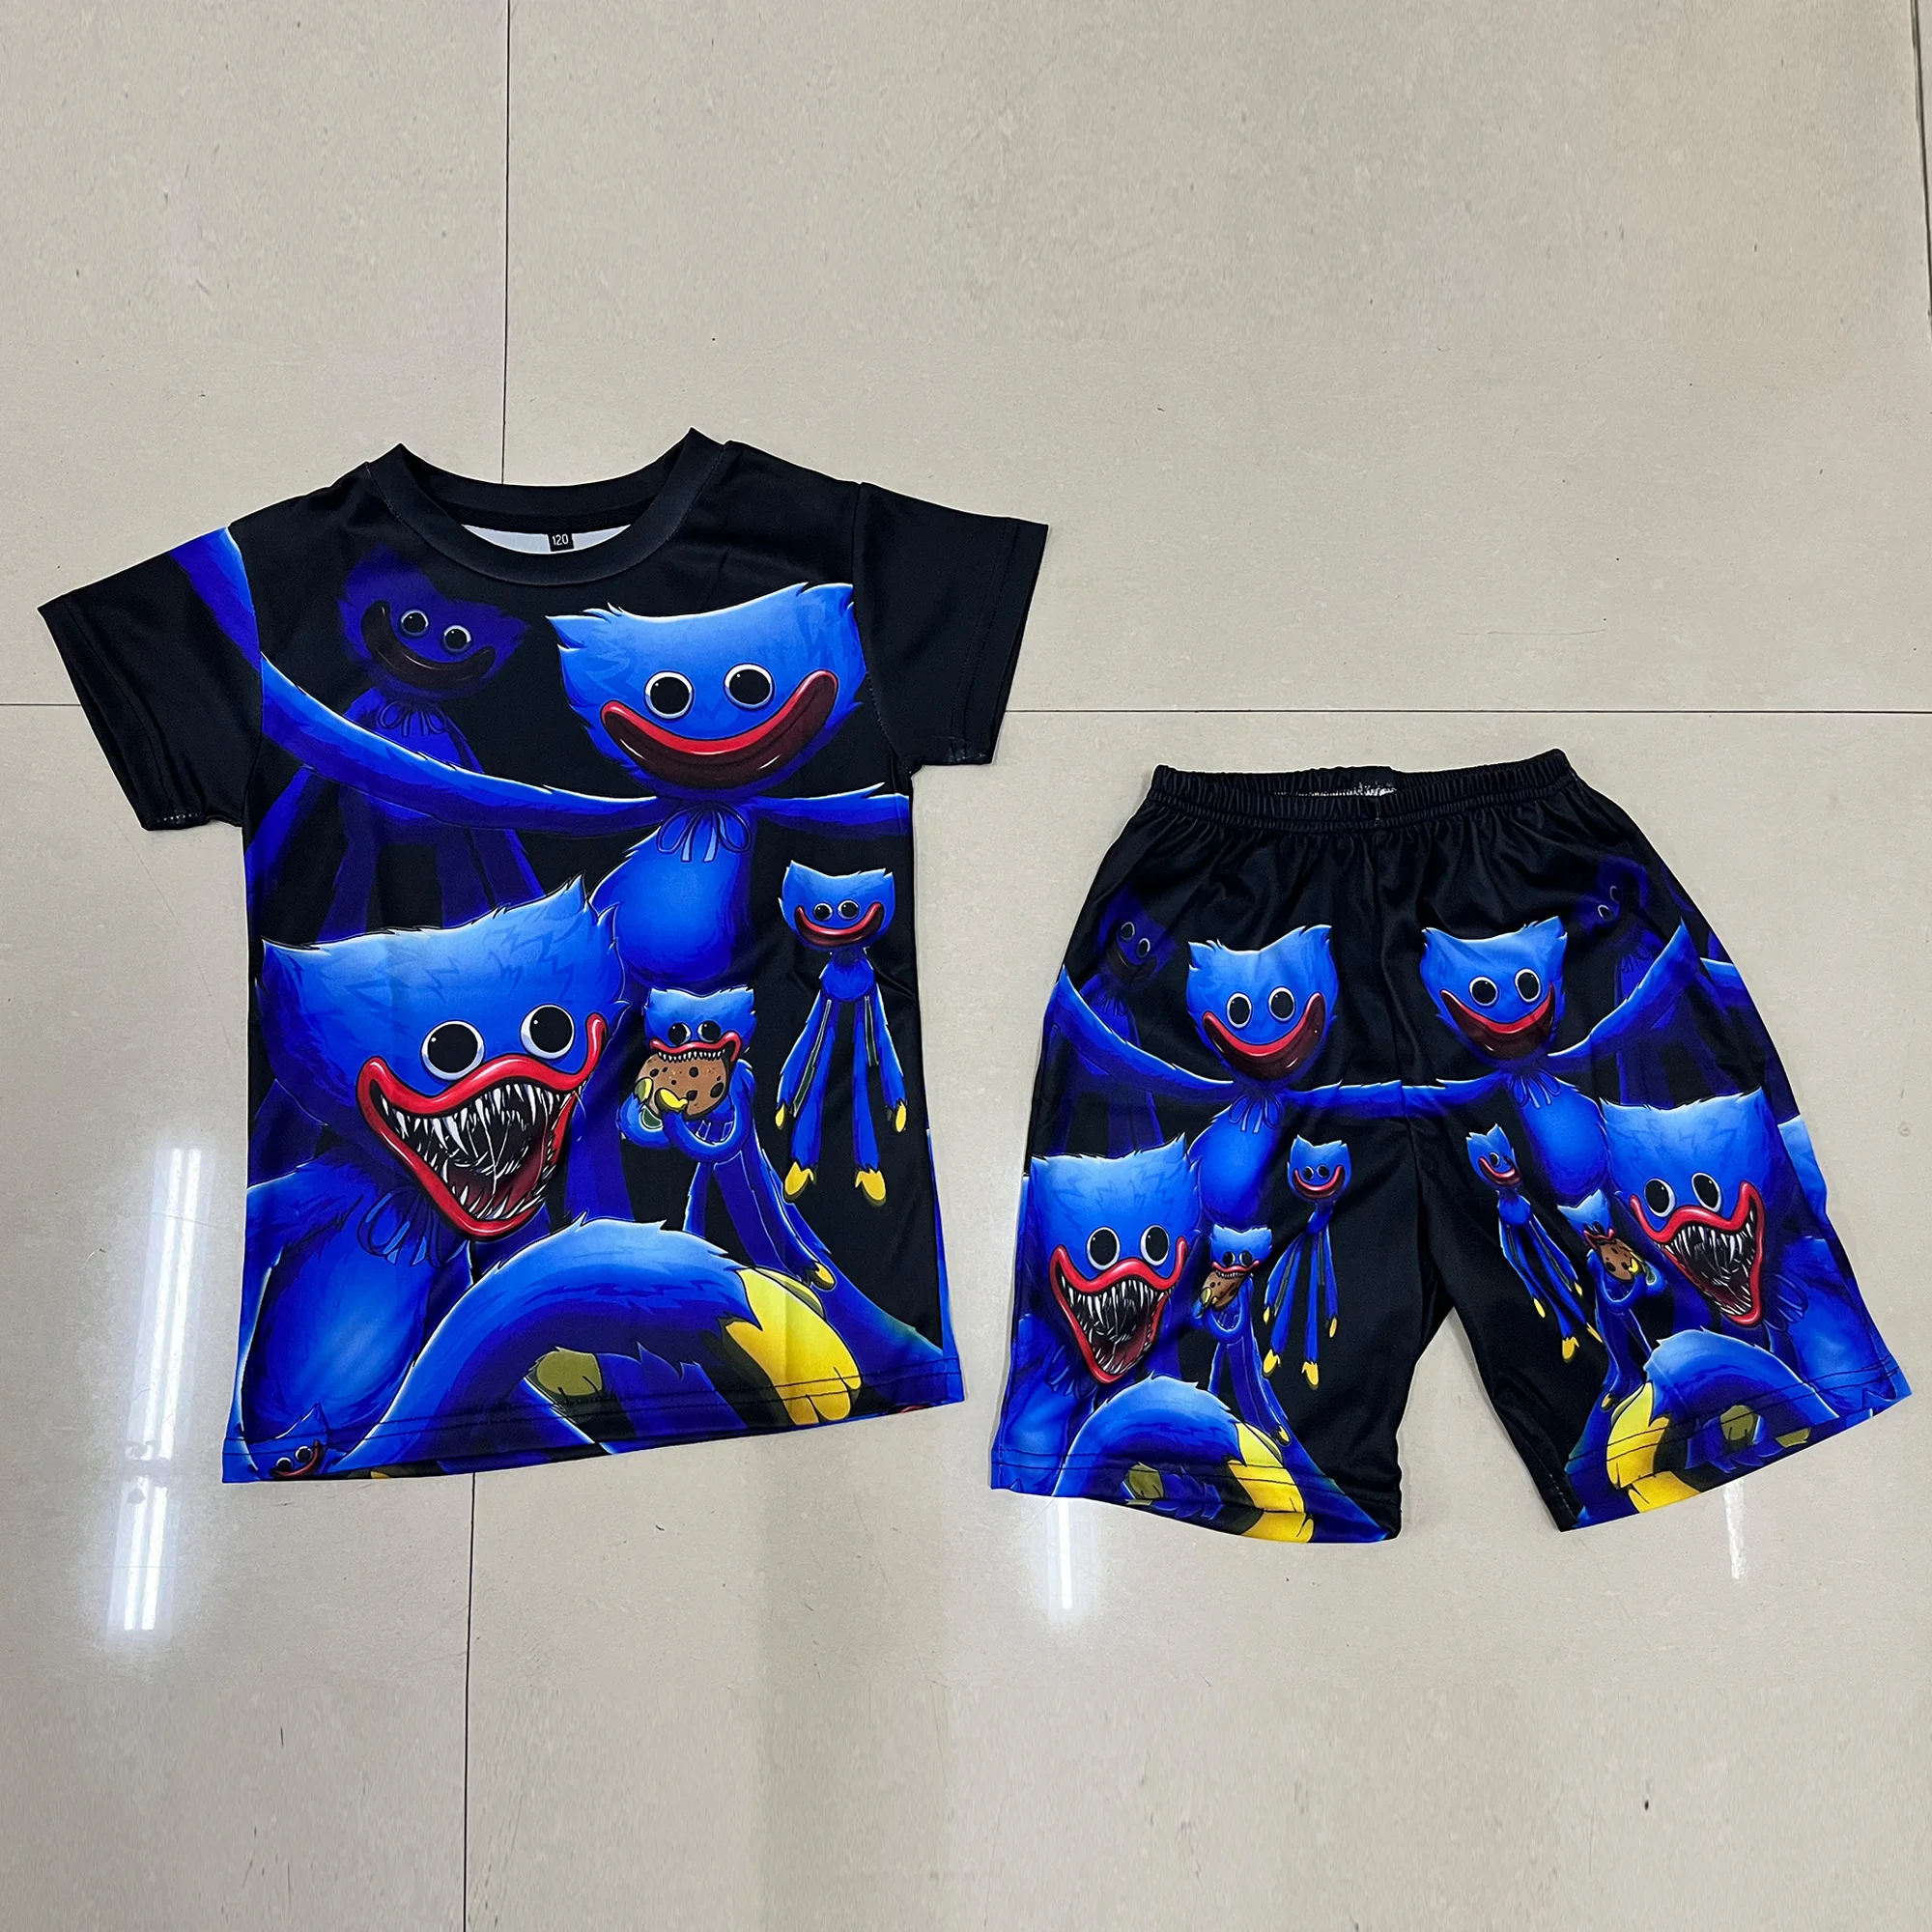 children's t shirt with animals	 Anime Dragon Ball Son Goku 3D Print Kids T Shirt Summer Fashion Casual T-shirt Boy Girl Unisex Children's Clothing Tshirt Tops t-shirt kid dress	